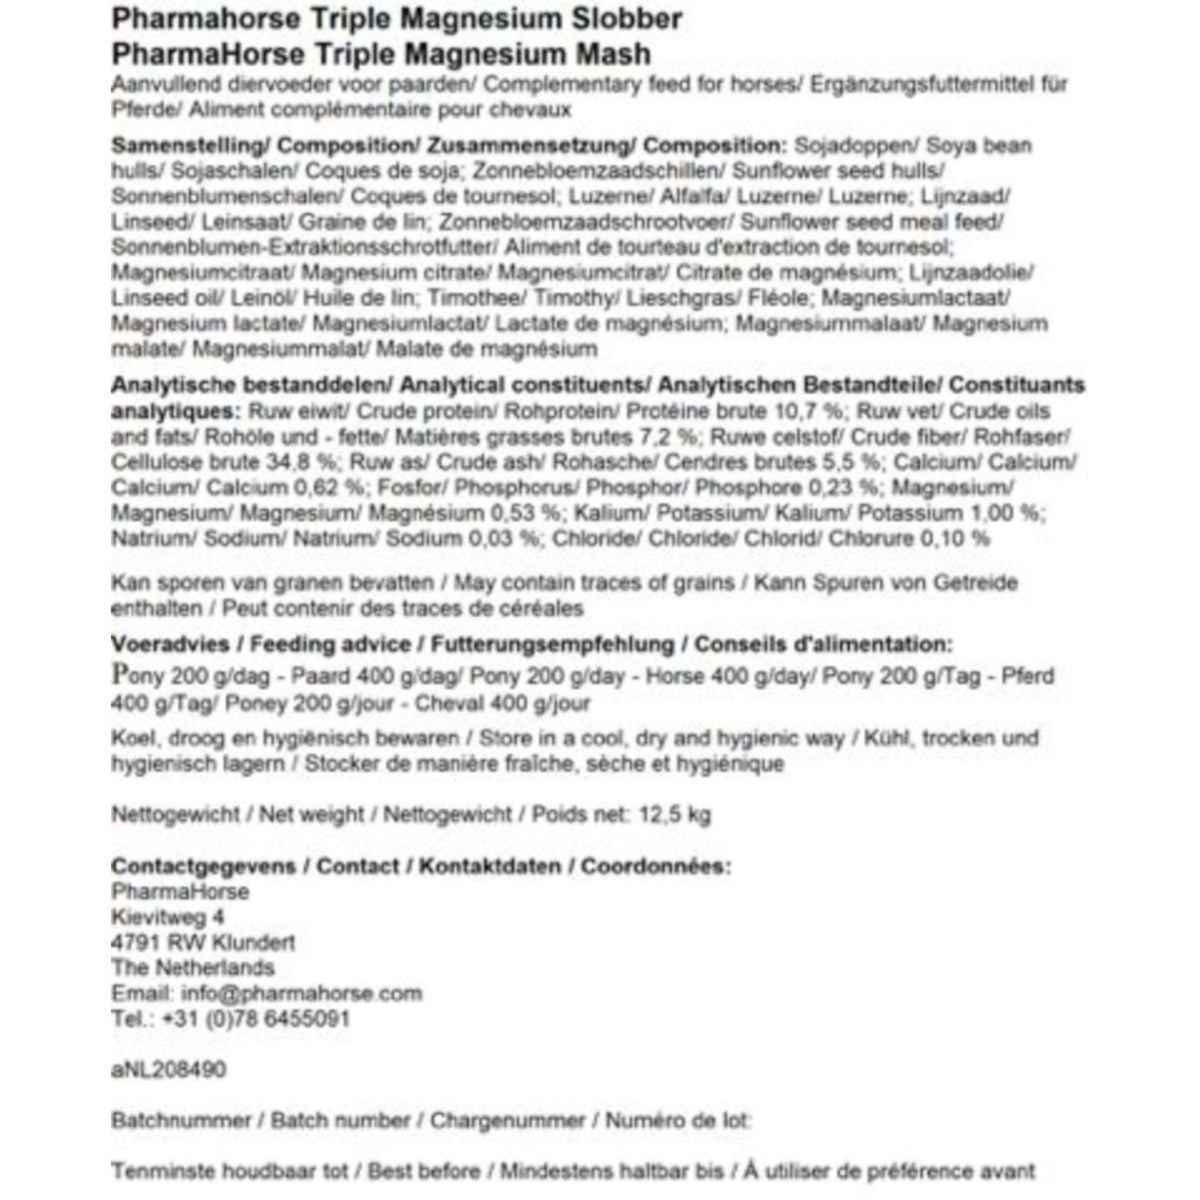 PharmaHorse Mash TripleMagnesium